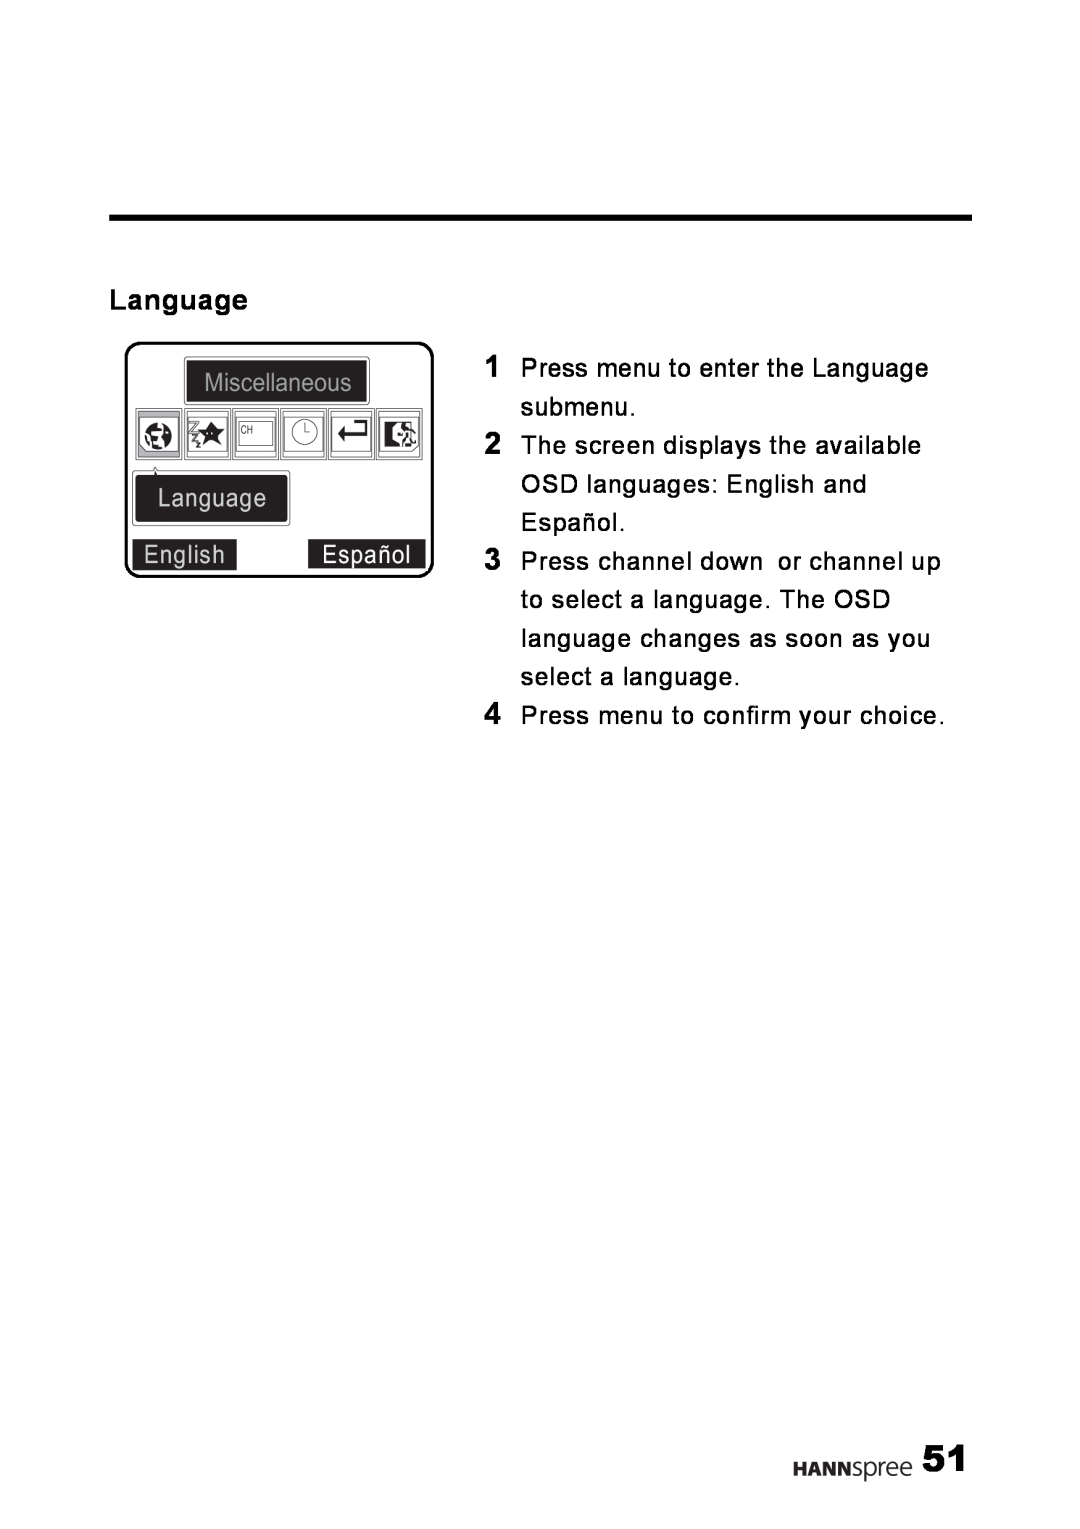 HANNspree LT02-12U1-000 user manual Miscellaneous, Language English Español, Press menu to enter the Language submenu 